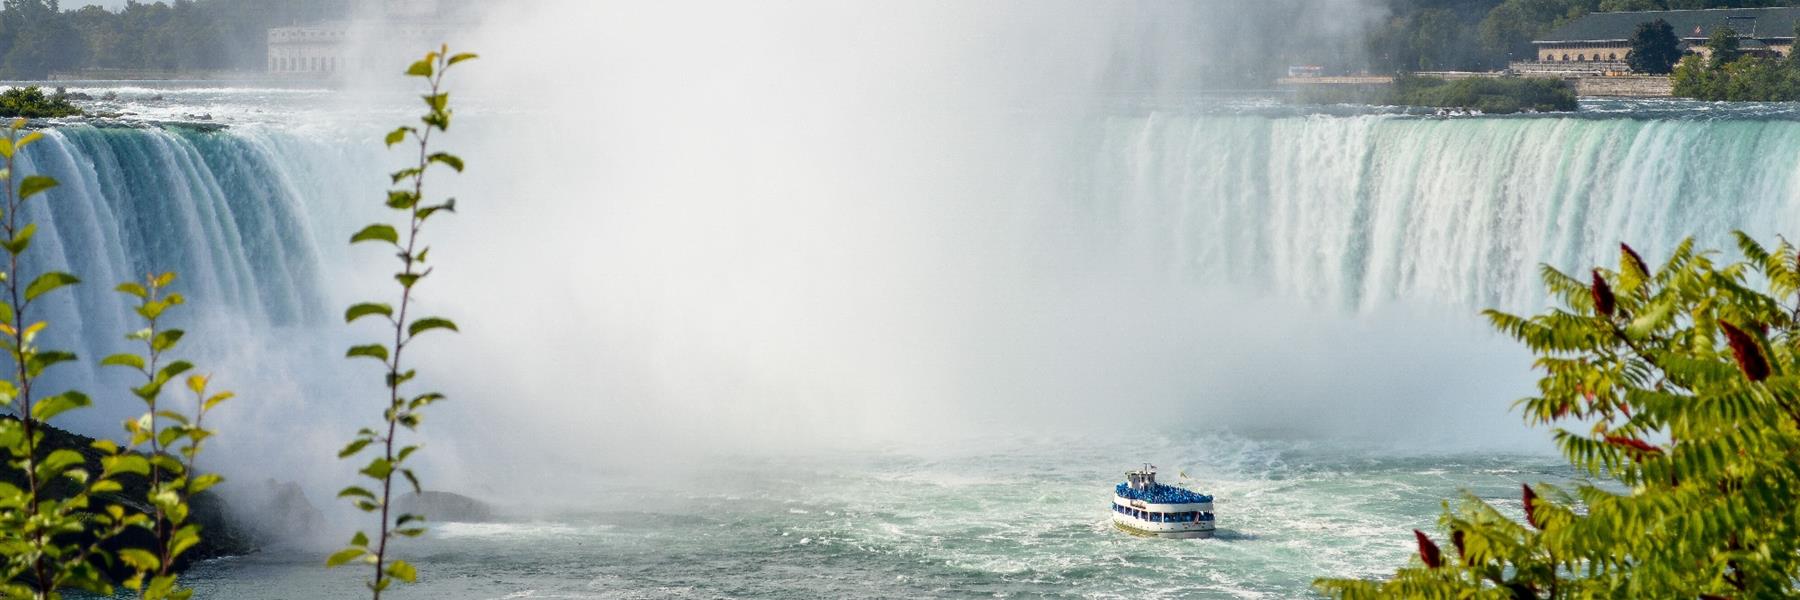 Best of Niagara Falls, USA Tour in Niagara Falls, New York